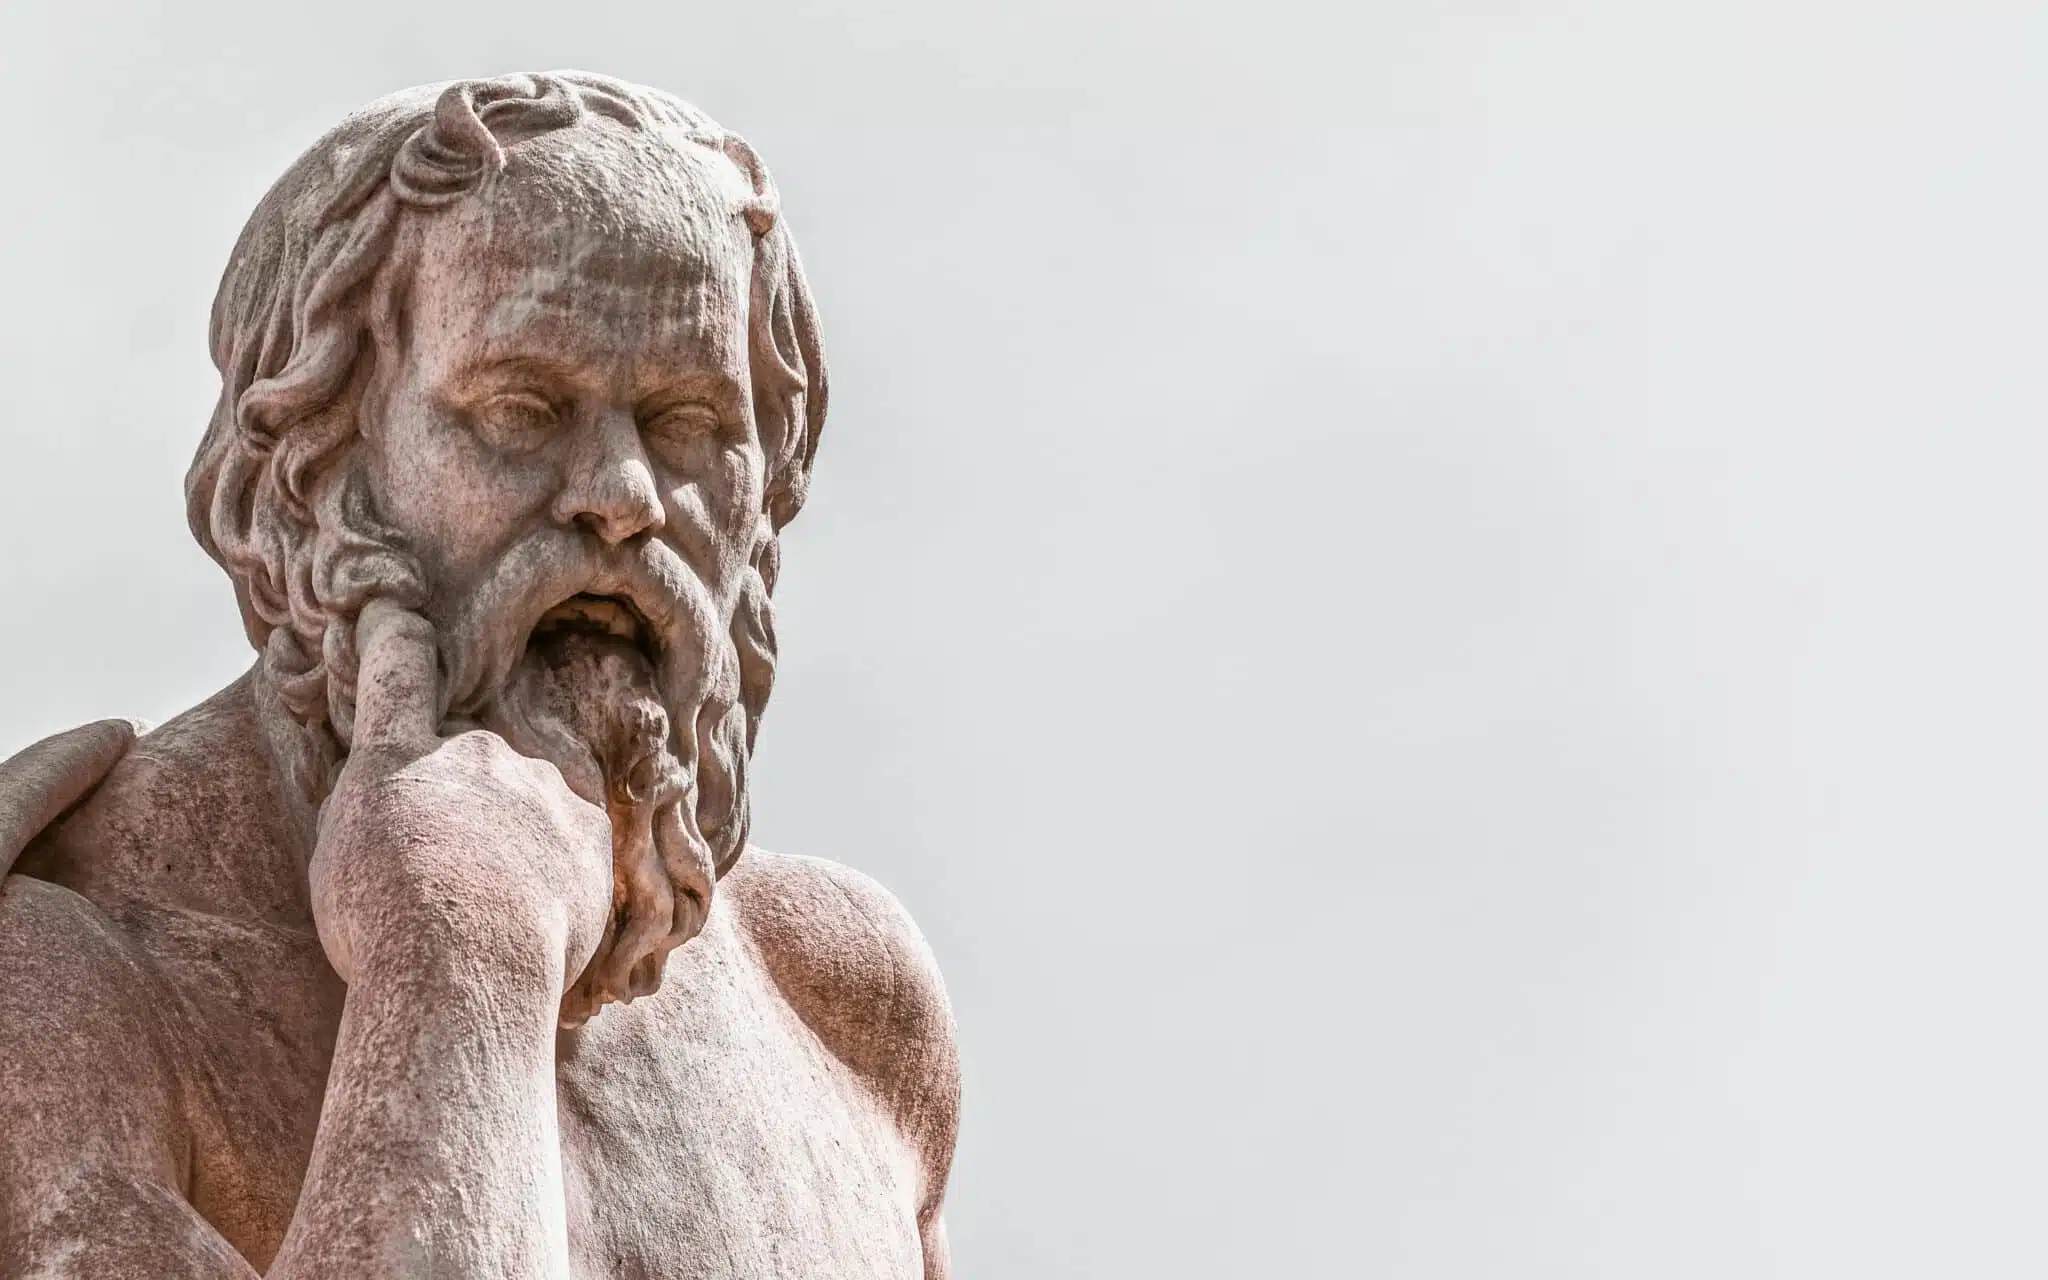 Socrates the ancient Greek philosopher under dramatic sky, Athens - OLYMPUS DIGITAL CAMERA